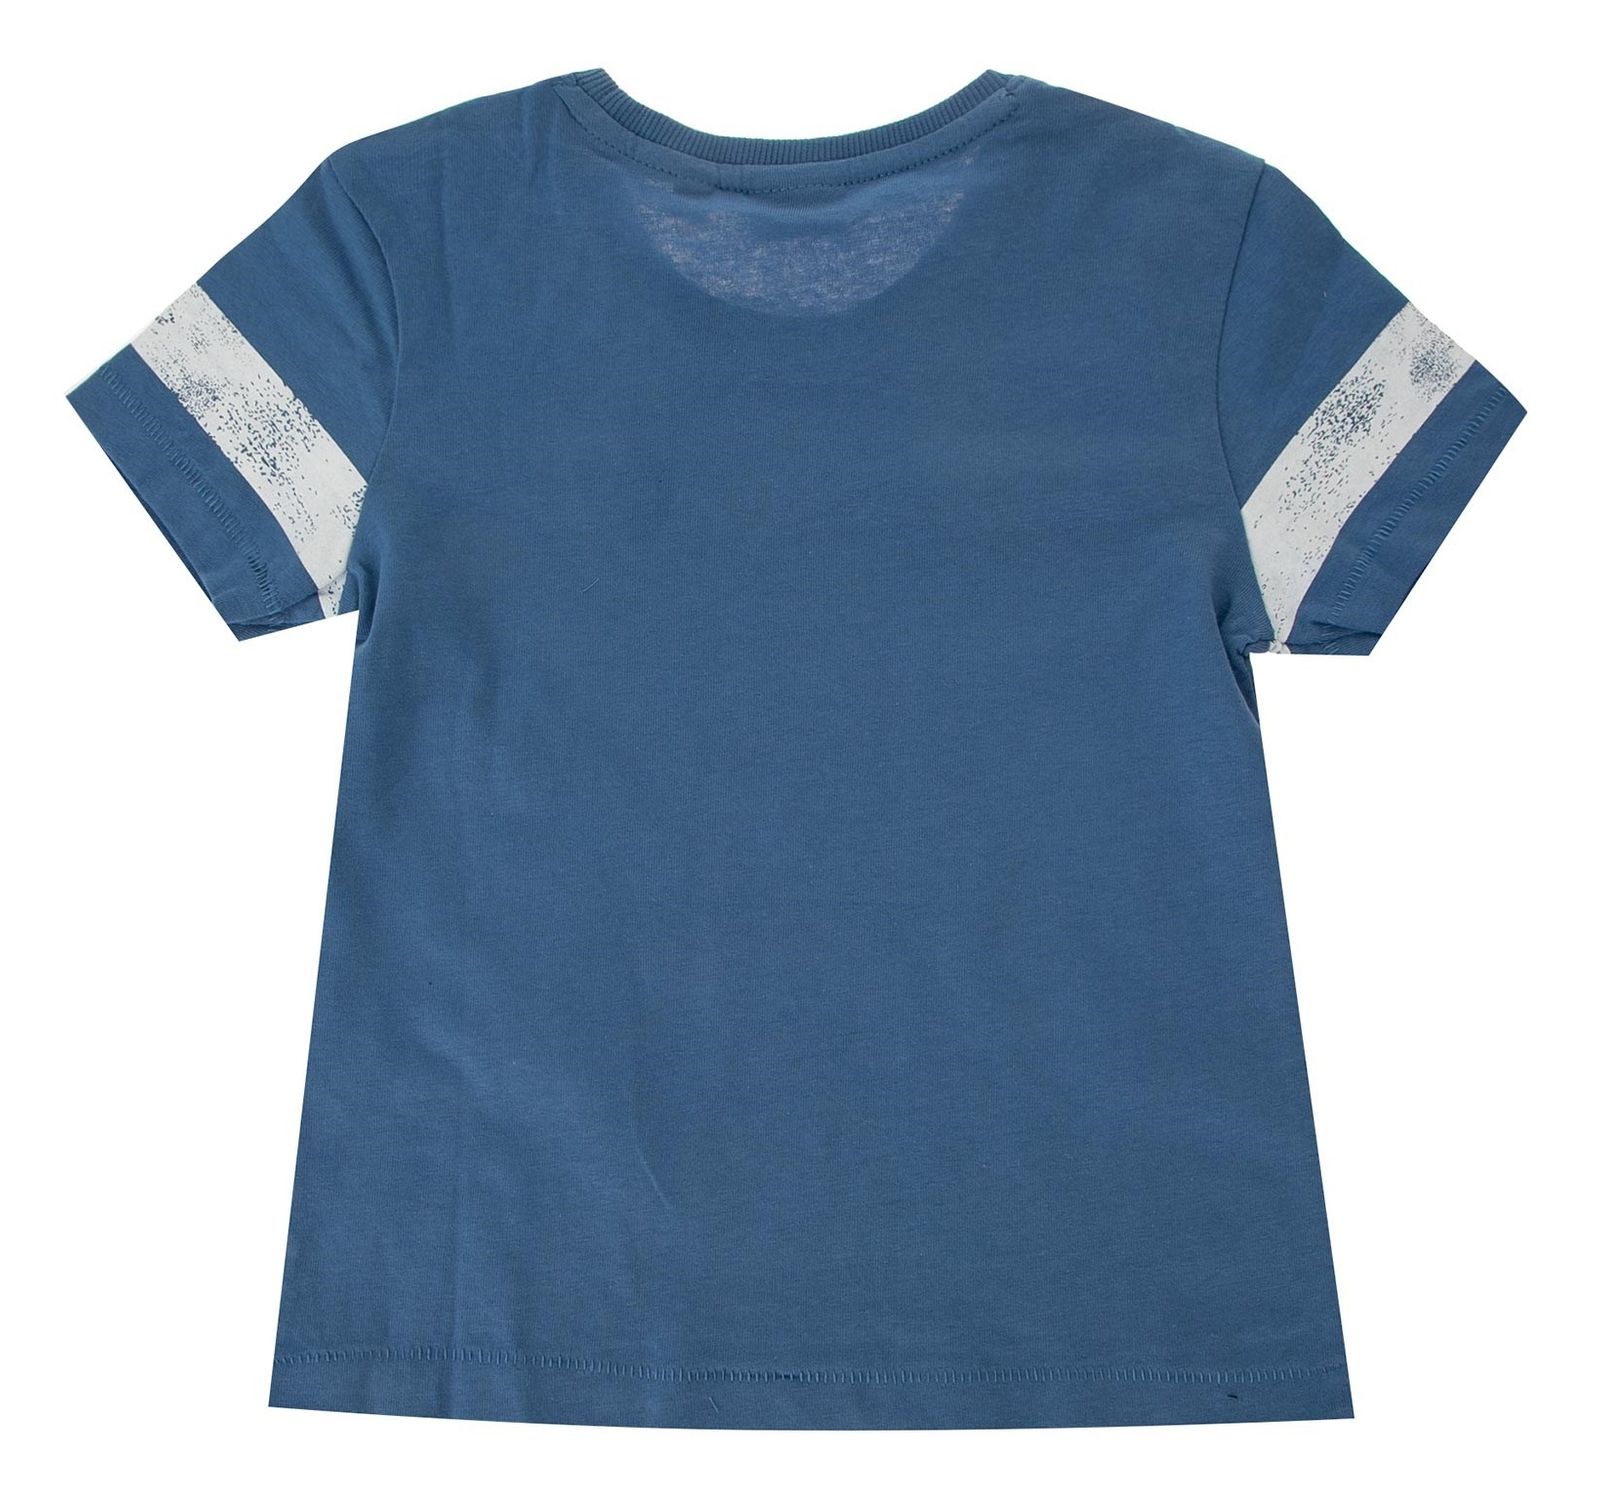 تی شرت و شلوارک نخی پسرانه - بلوکیدز - آبي/سرمه اي - 3